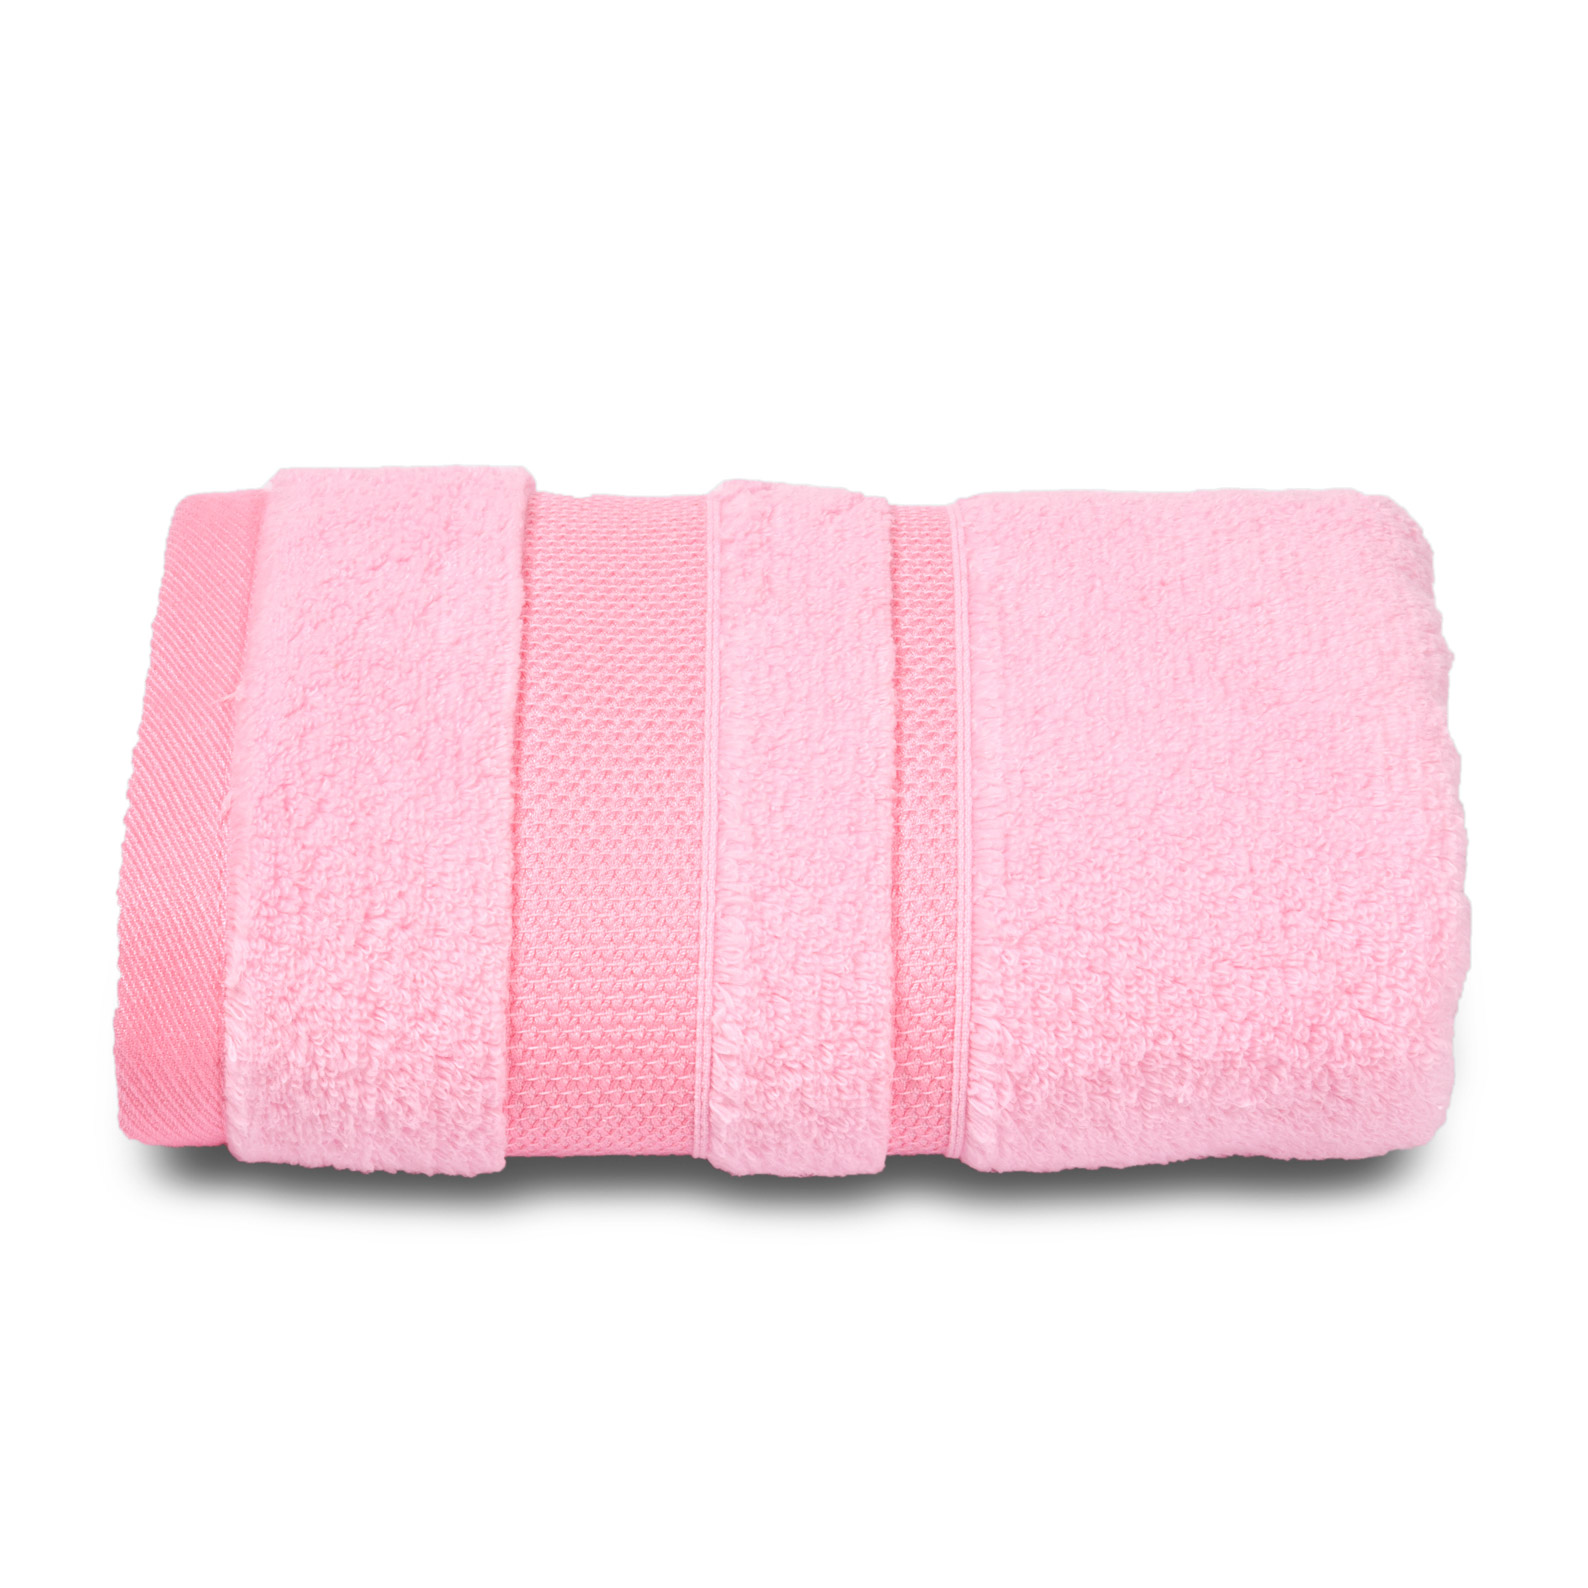 Полотенце махровое Cleanelly perfetto твист 50х100 розовый полотенце eumenia 50x100 см розовое